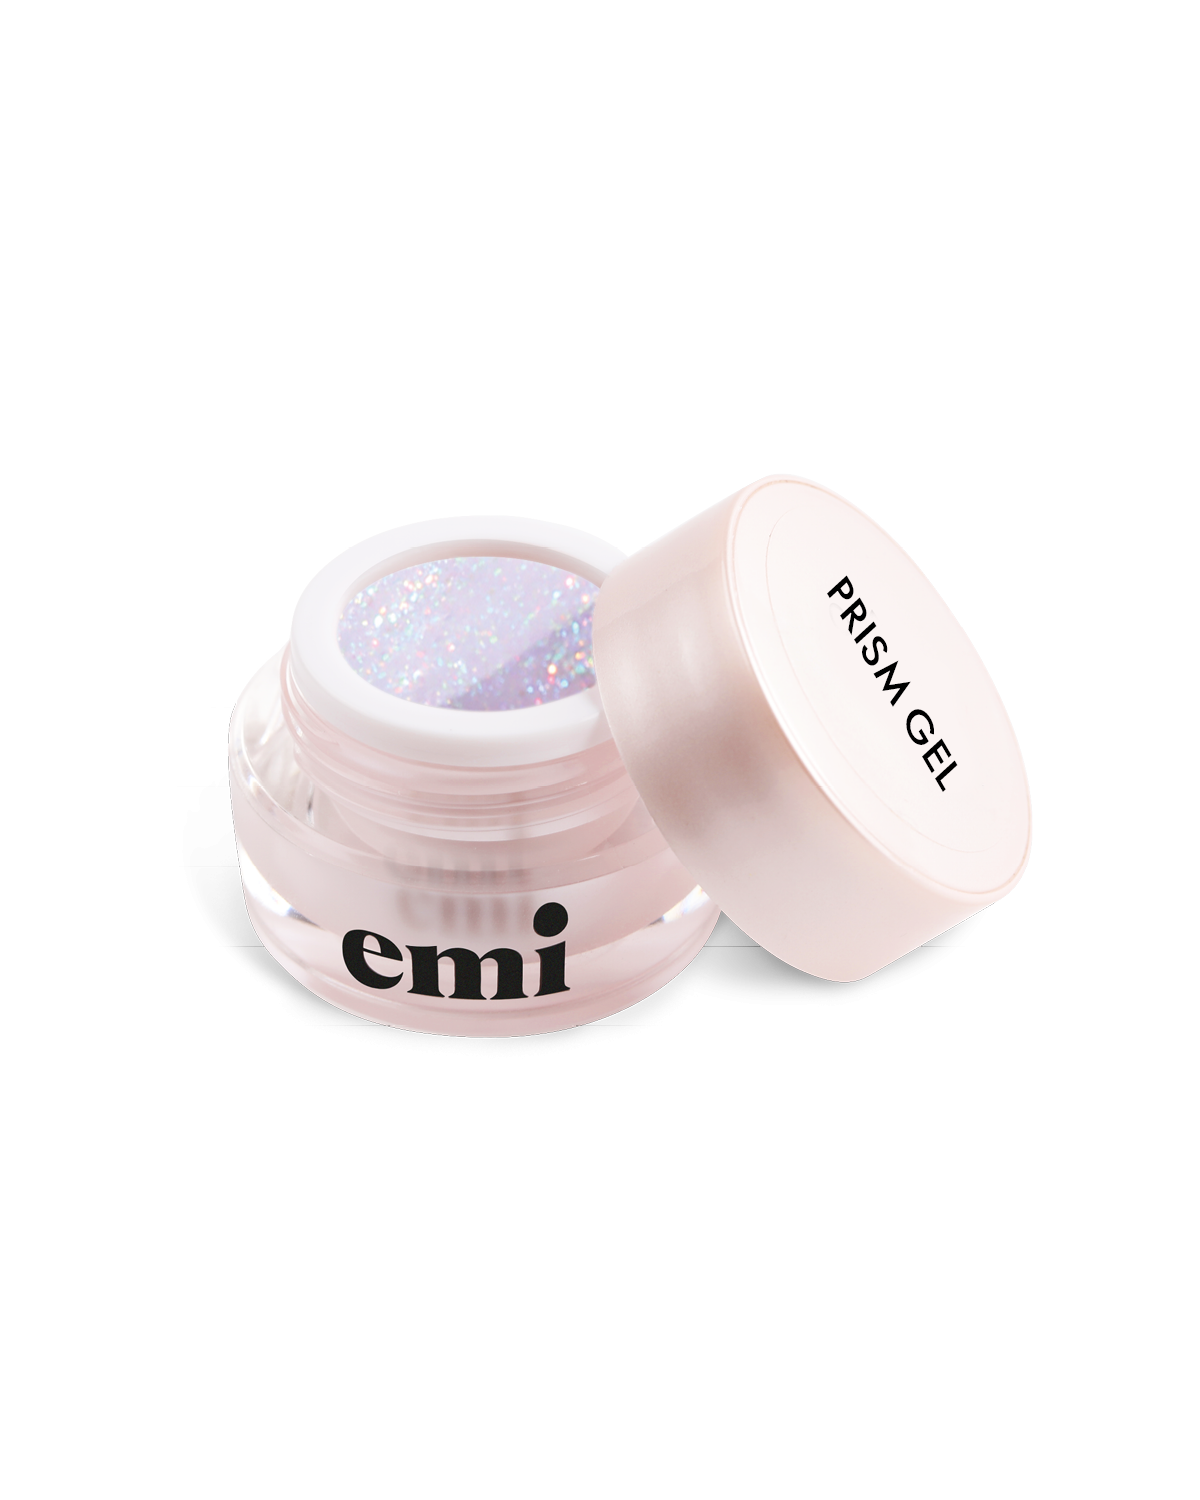 emi Shimmer Prism Gel, 5g - Kamuflážny stavebný gel s trblietkami